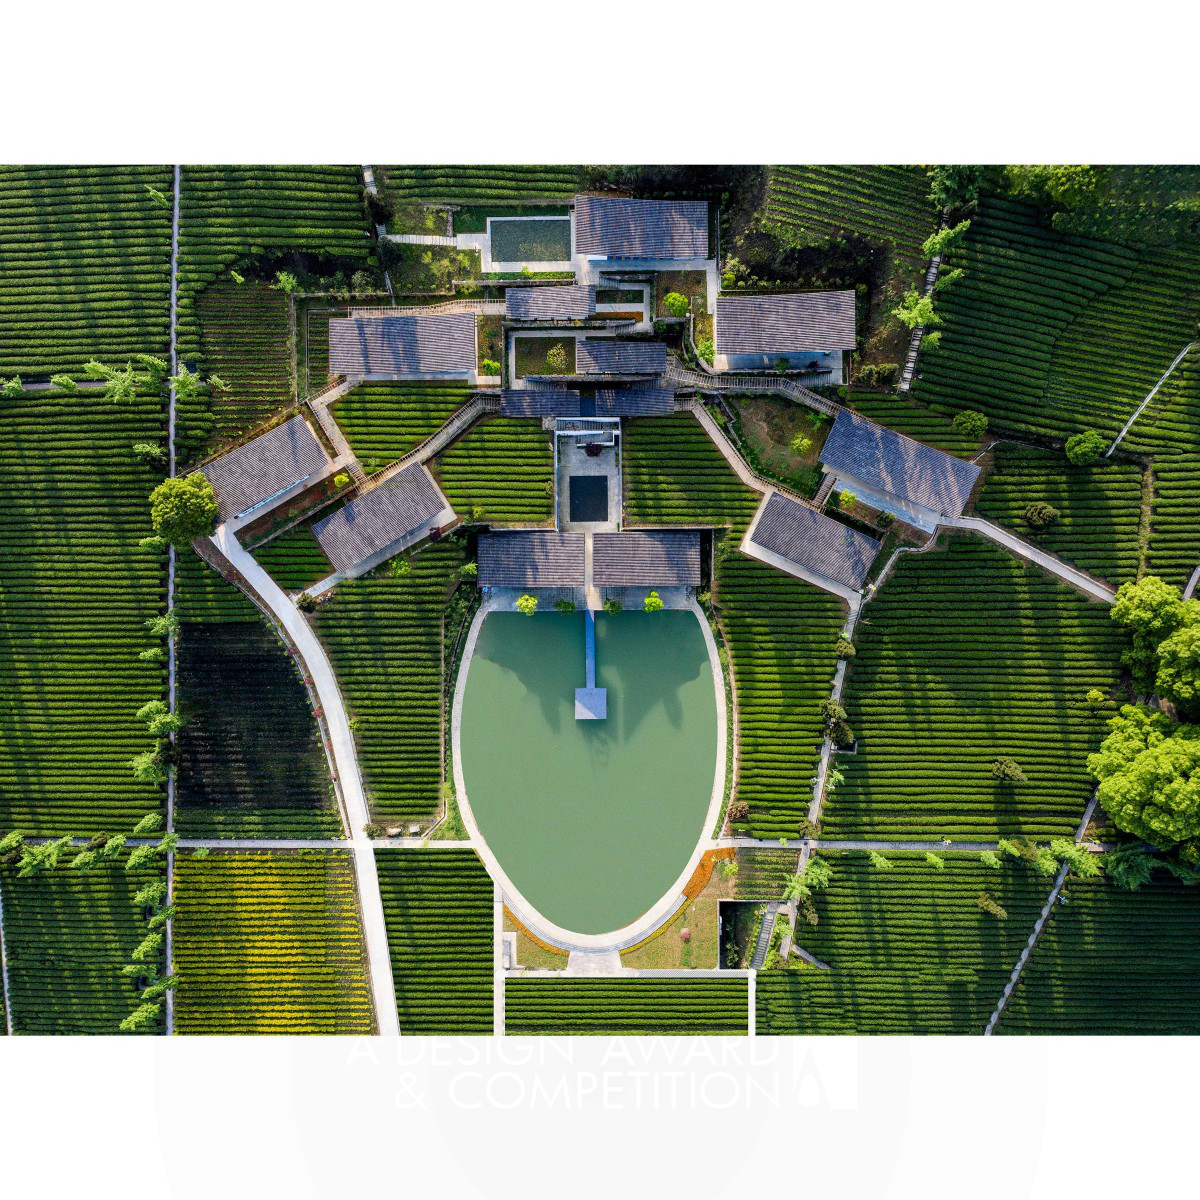 Yawen Duan wins Iron at the prestigious A' Landscape Planning and Garden Design Award with Dingxin Tea Garden Commercial.